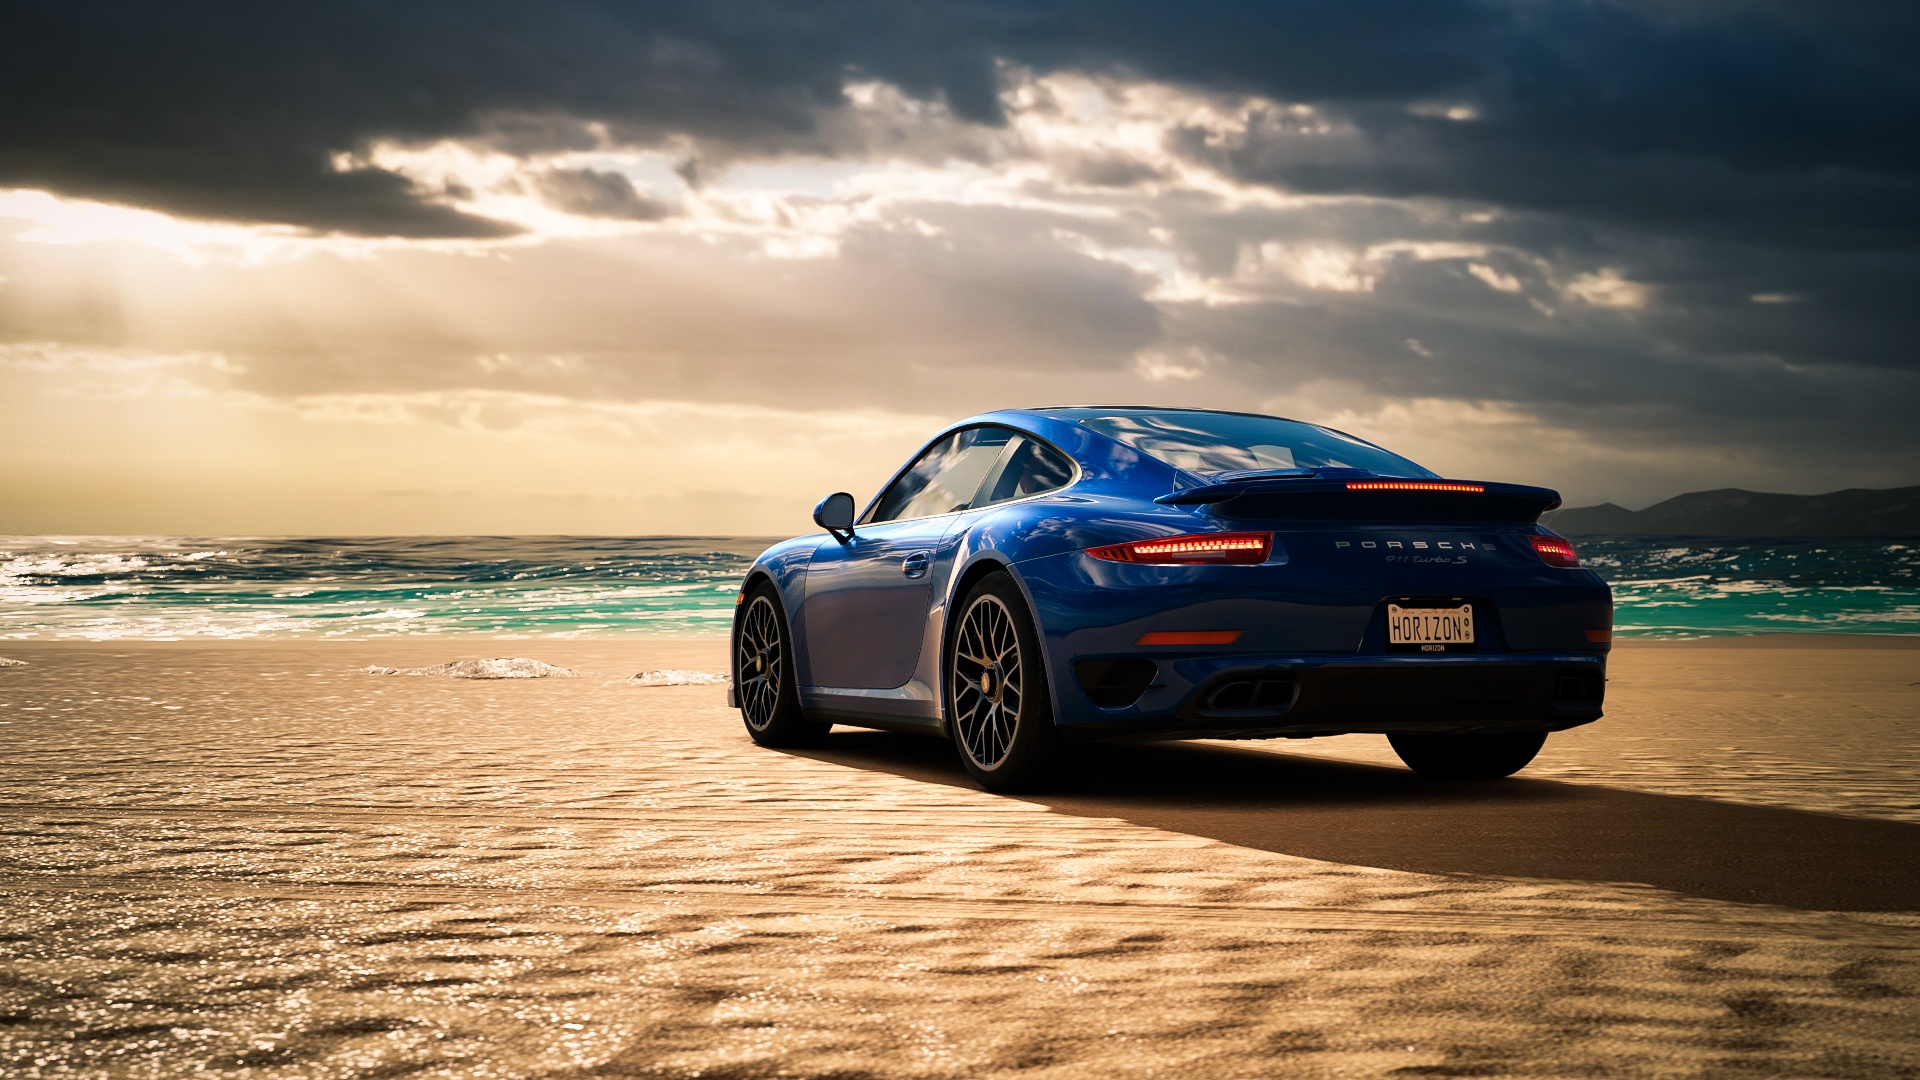 Wallpaper Porsche 911 Turbo at beach, blue, sports car